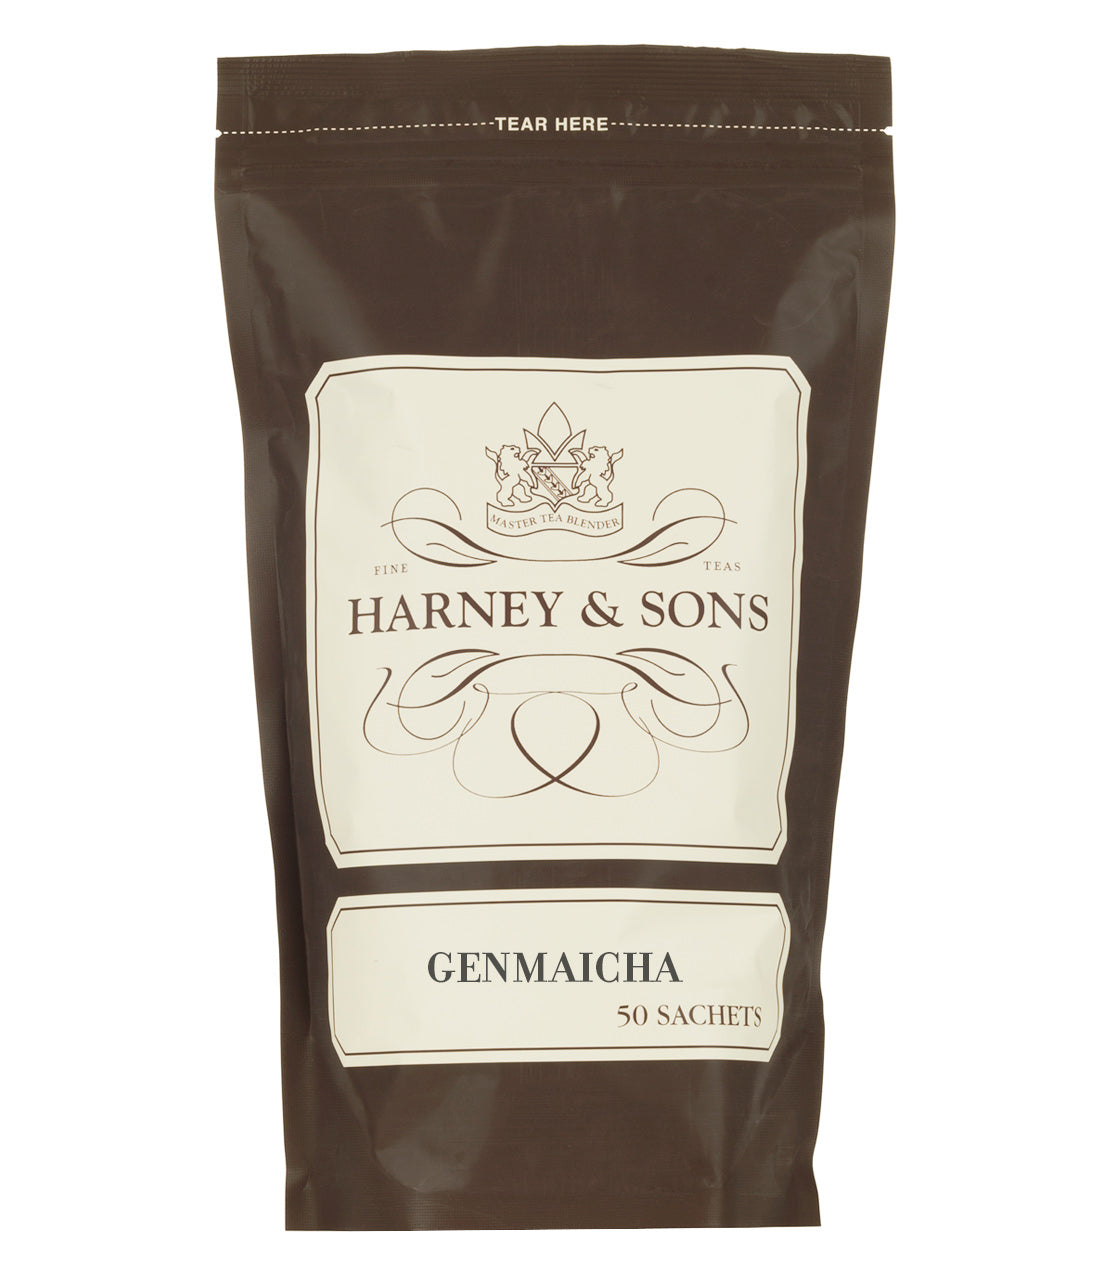 Genmaicha - Sachets Bag of 50 Sachets - Harney & Sons Fine Teas